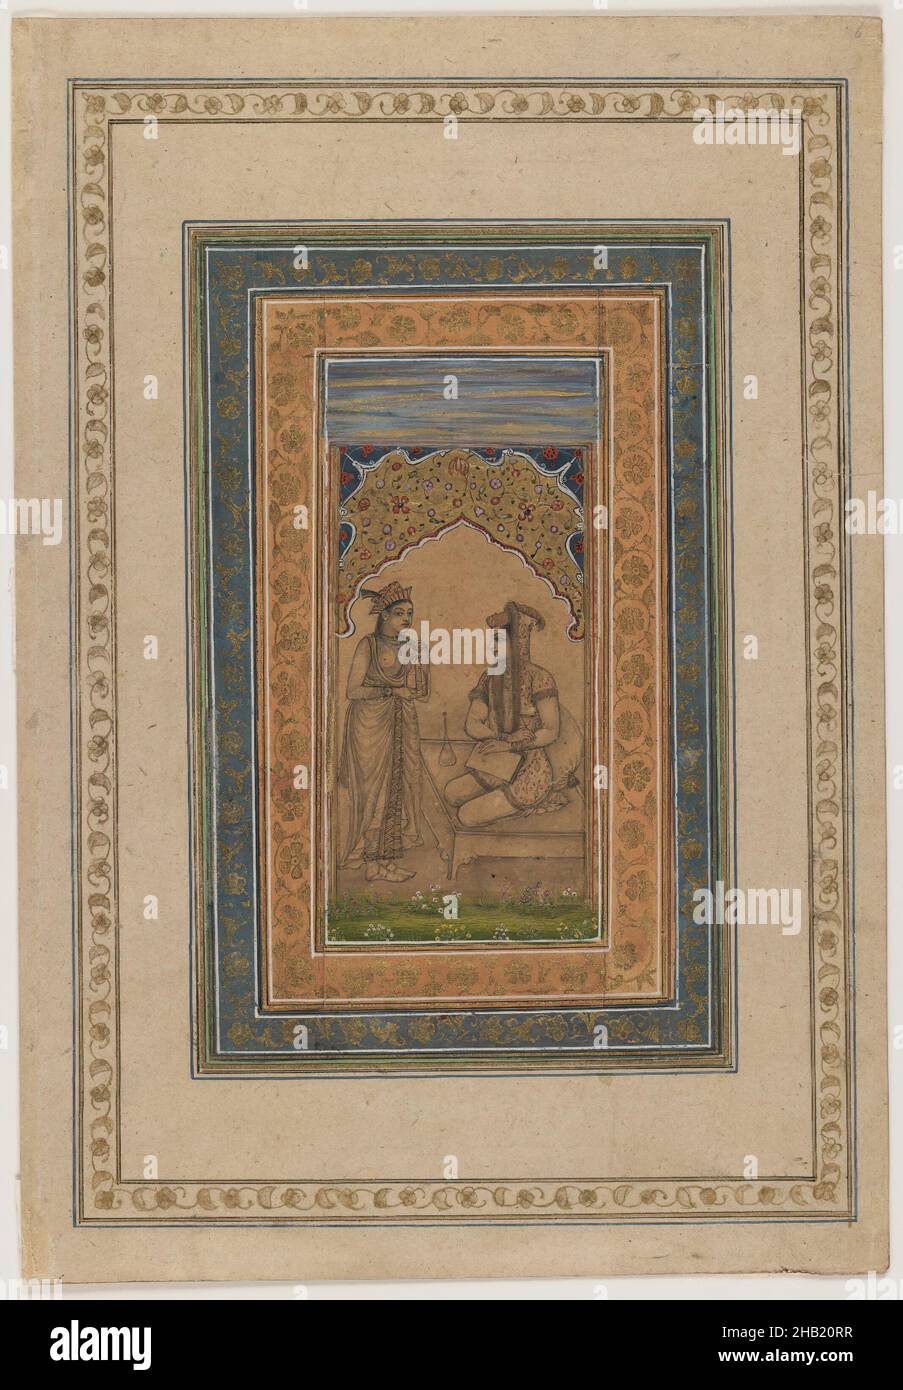 Pittura in miniatura, Pittura, Deccan, India, 18th secolo, 19 1/8 x 14 7/8 pollici, 48,5 x 37,8 cm Foto Stock